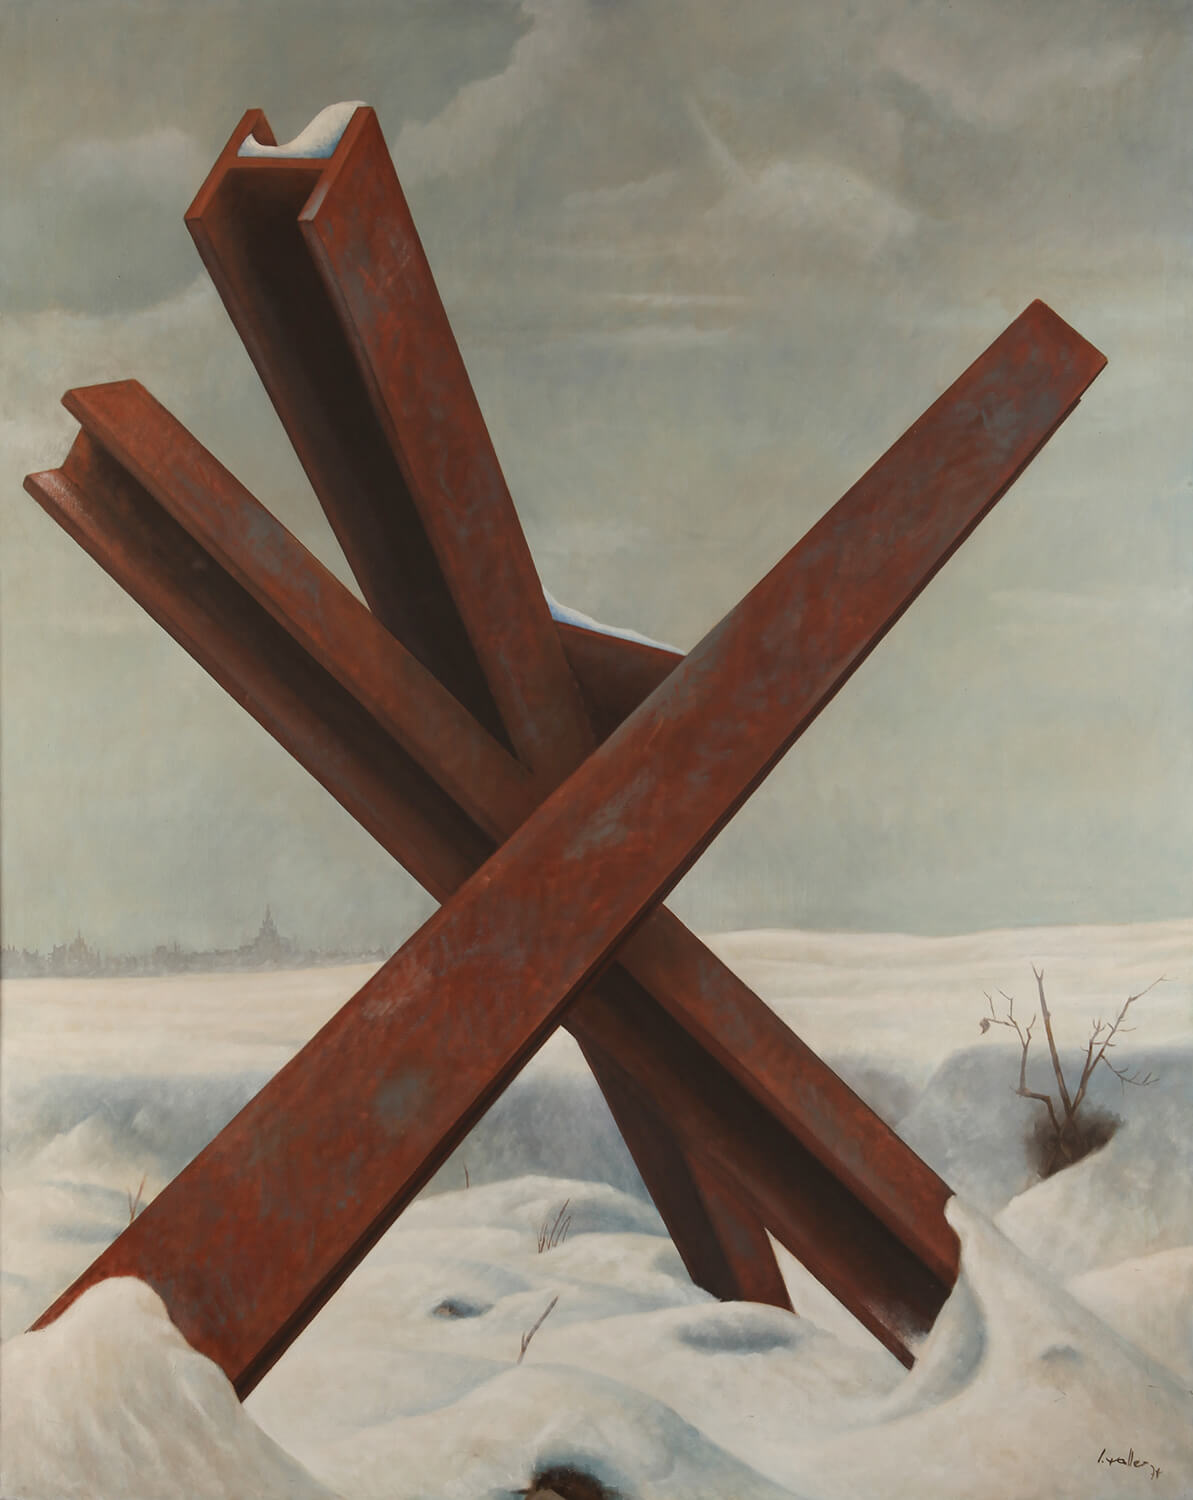 Jürgen Waller, Memorial outside Moscow, 1974, oil on canvas, 150 x 120 cm